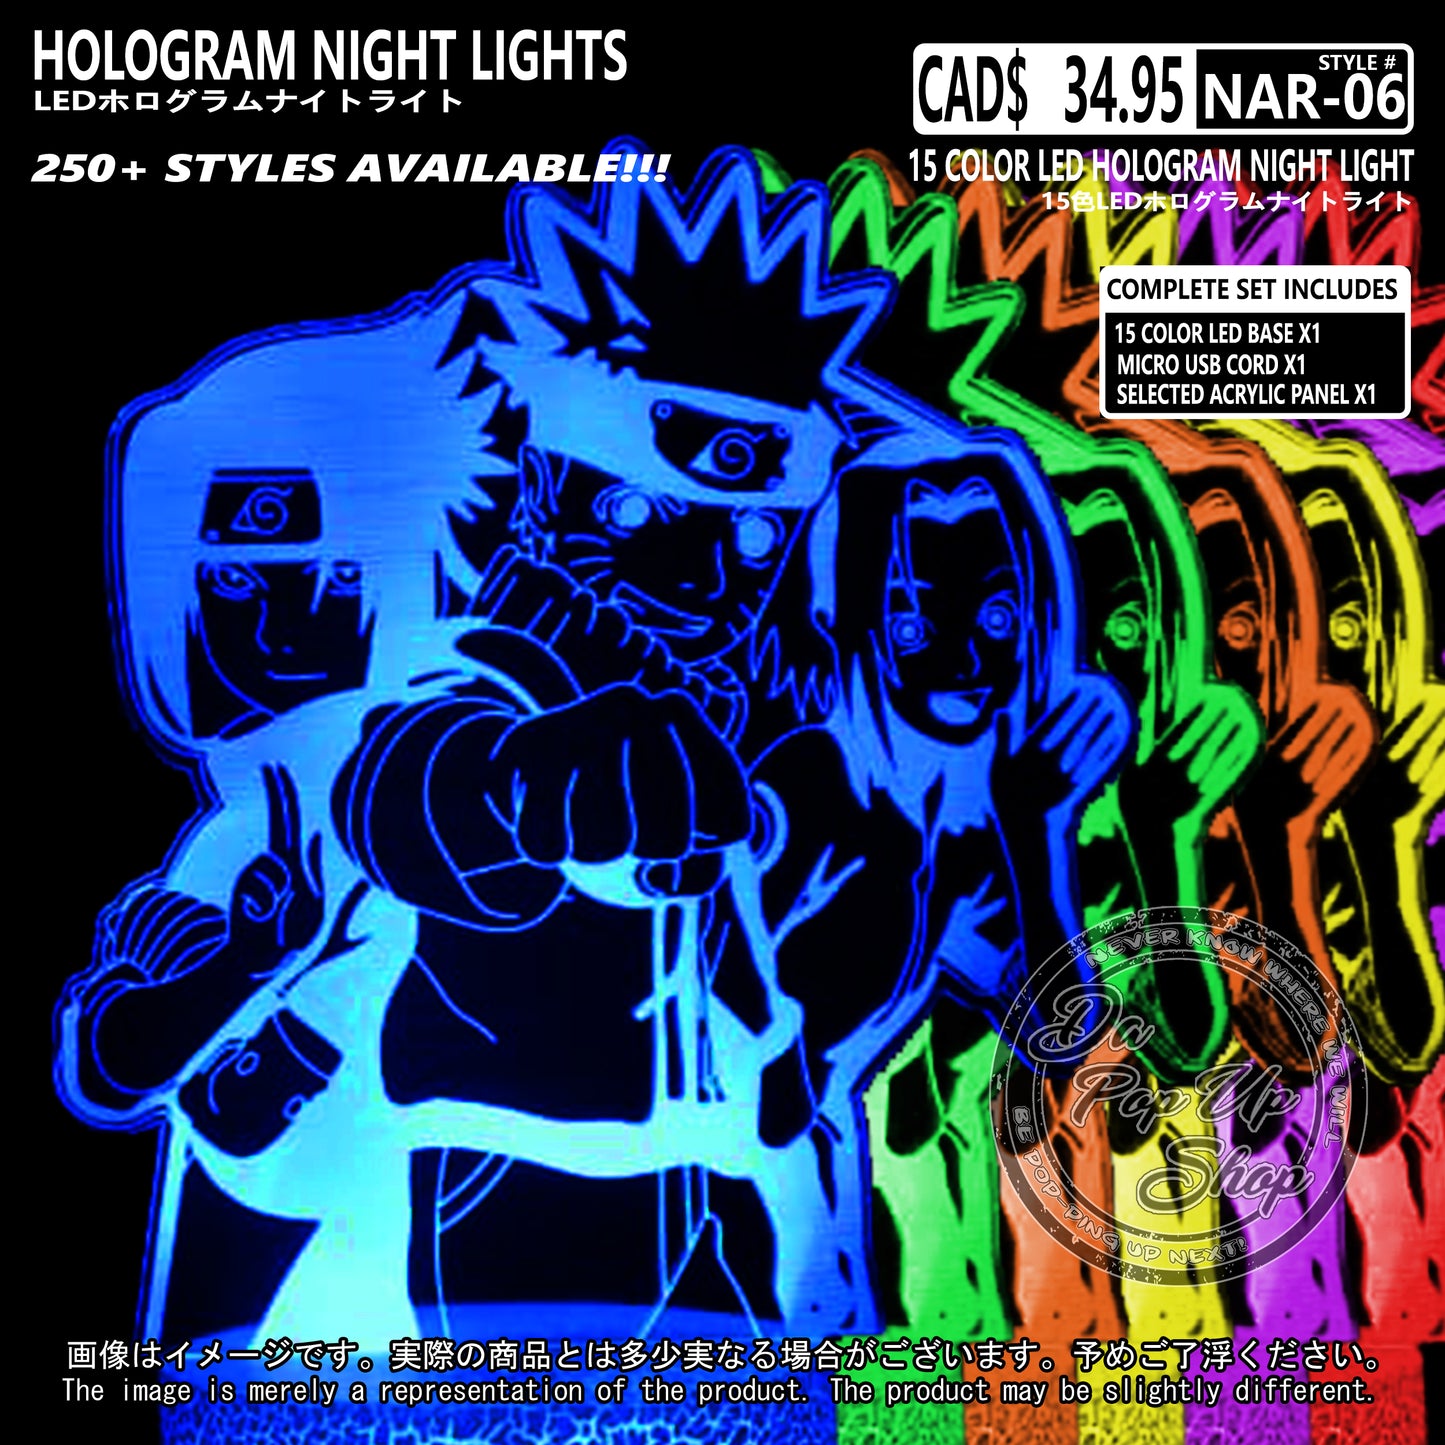 (NAR-06) Naruto Hologram LED Night Light